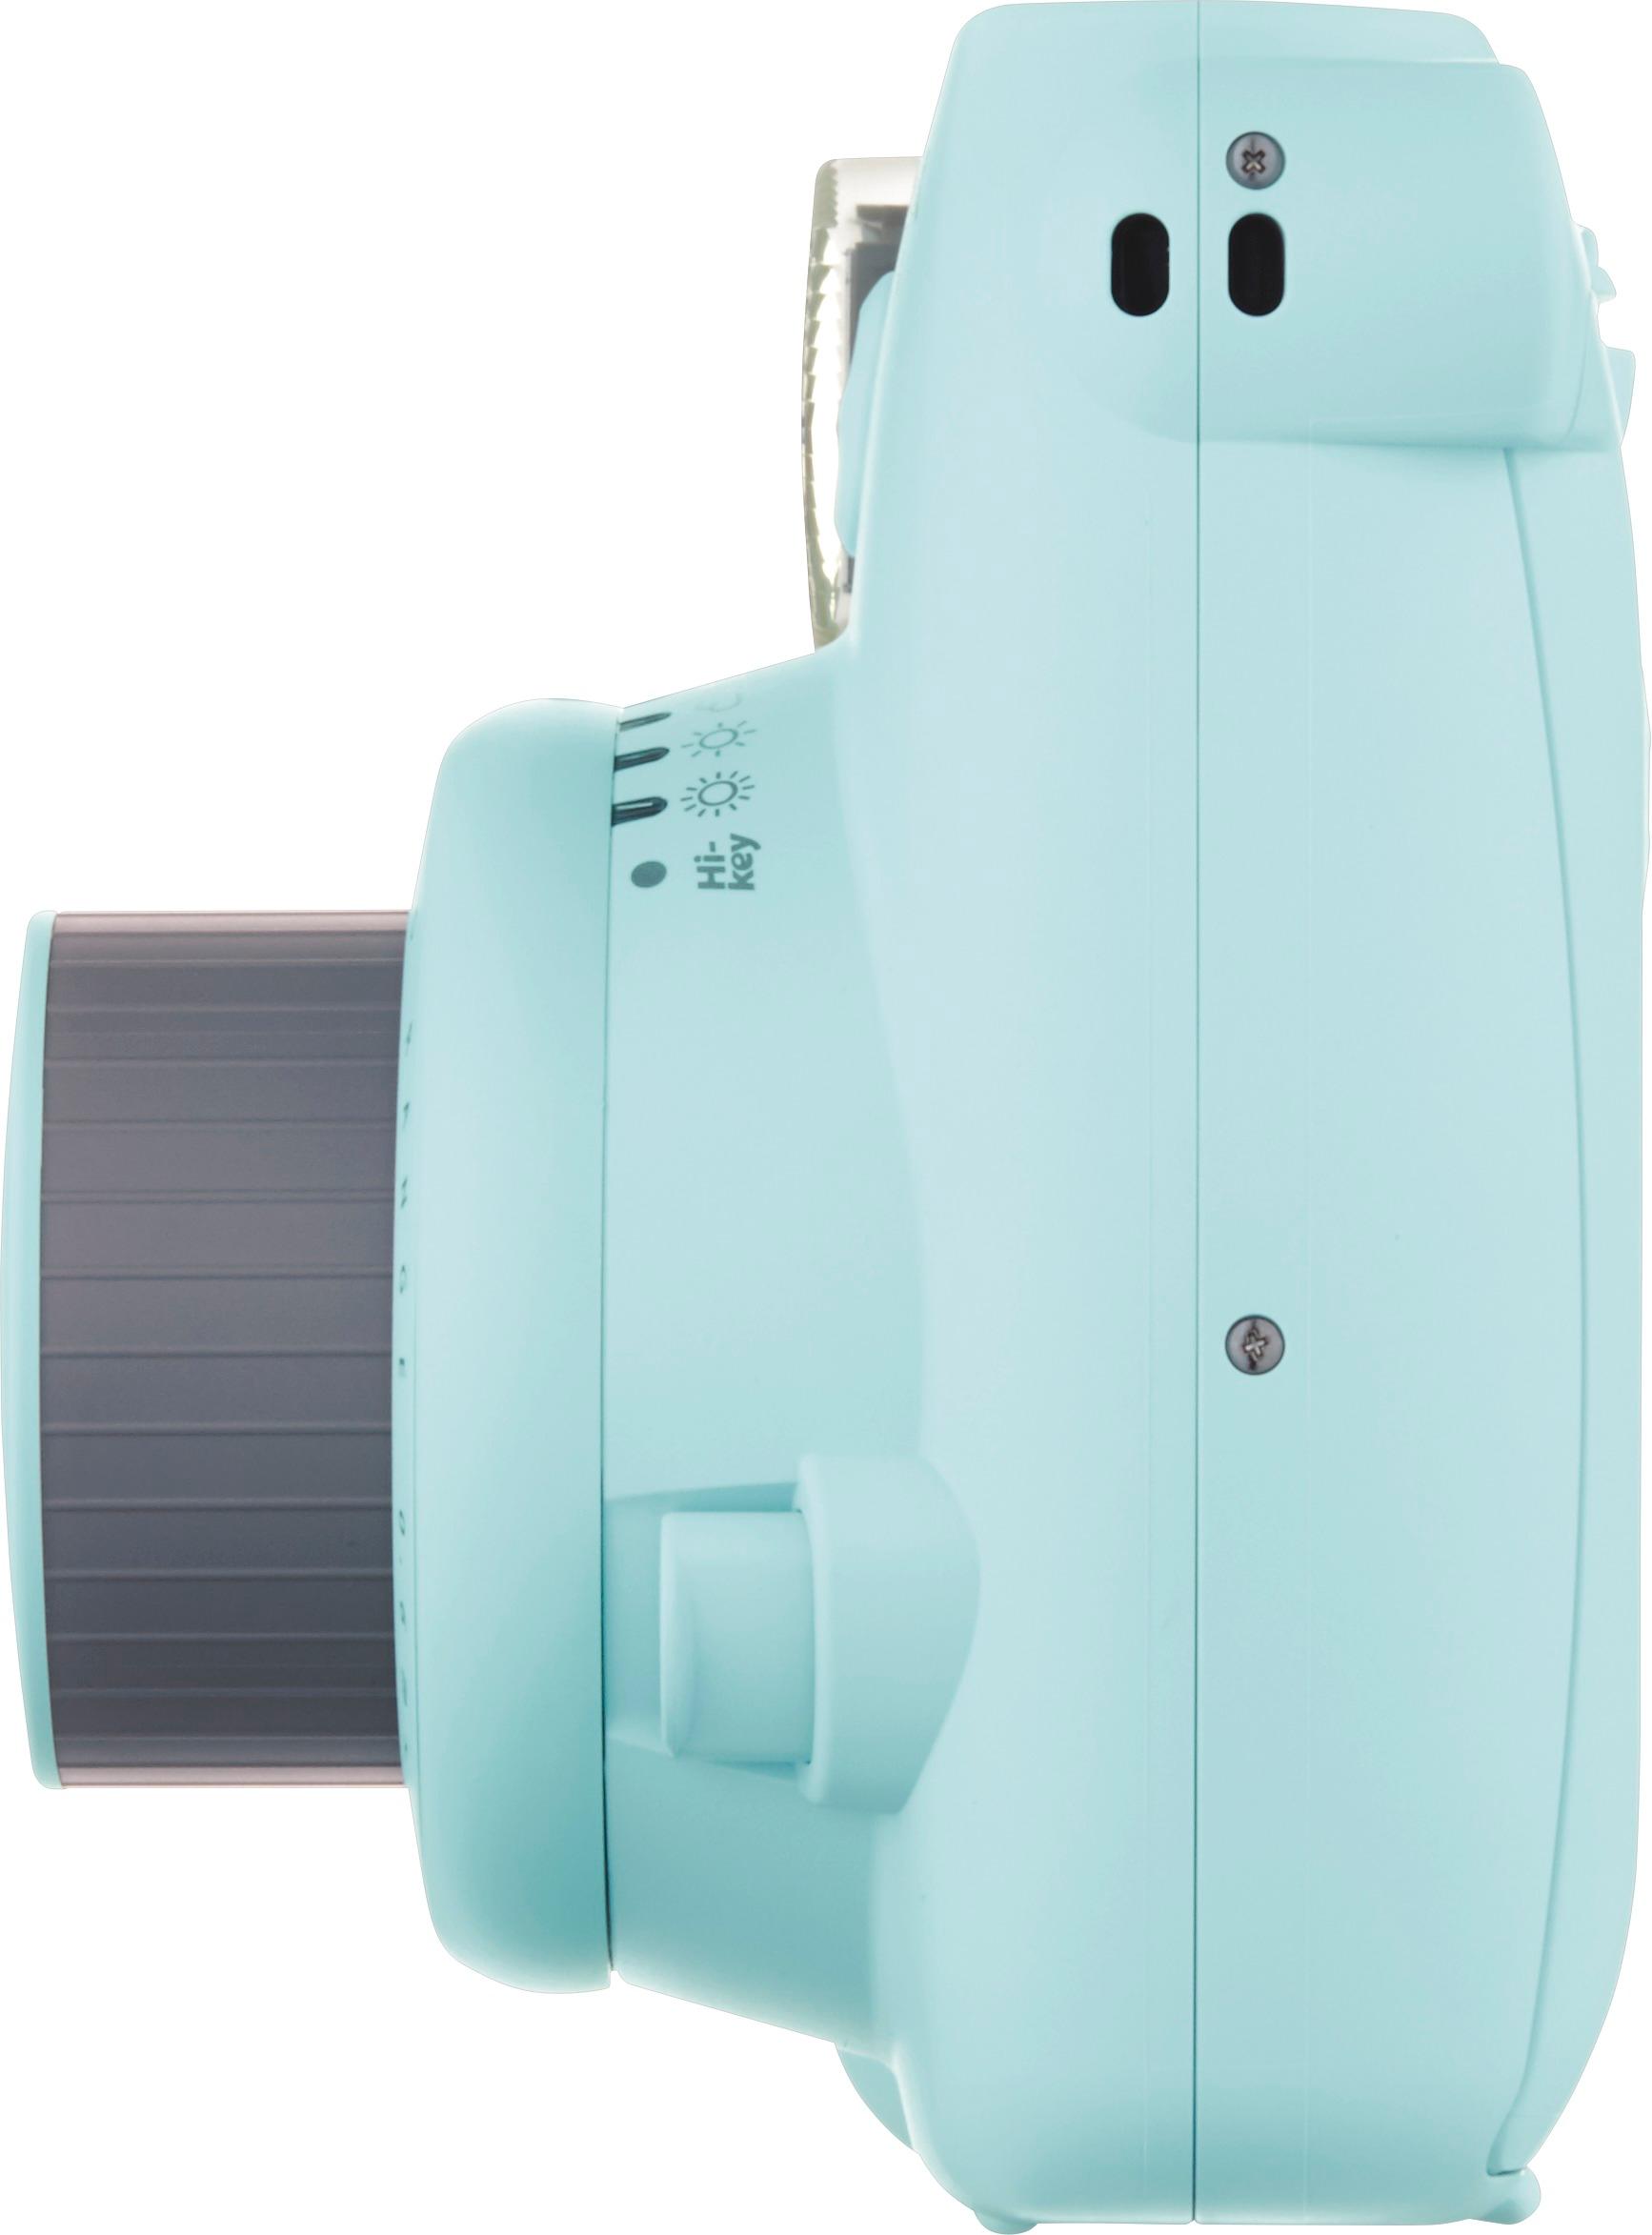 Fractie wildernis Muildier Best Buy: Fujifilm instax mini 9 Instant Film Camera Ice Blue 16550643